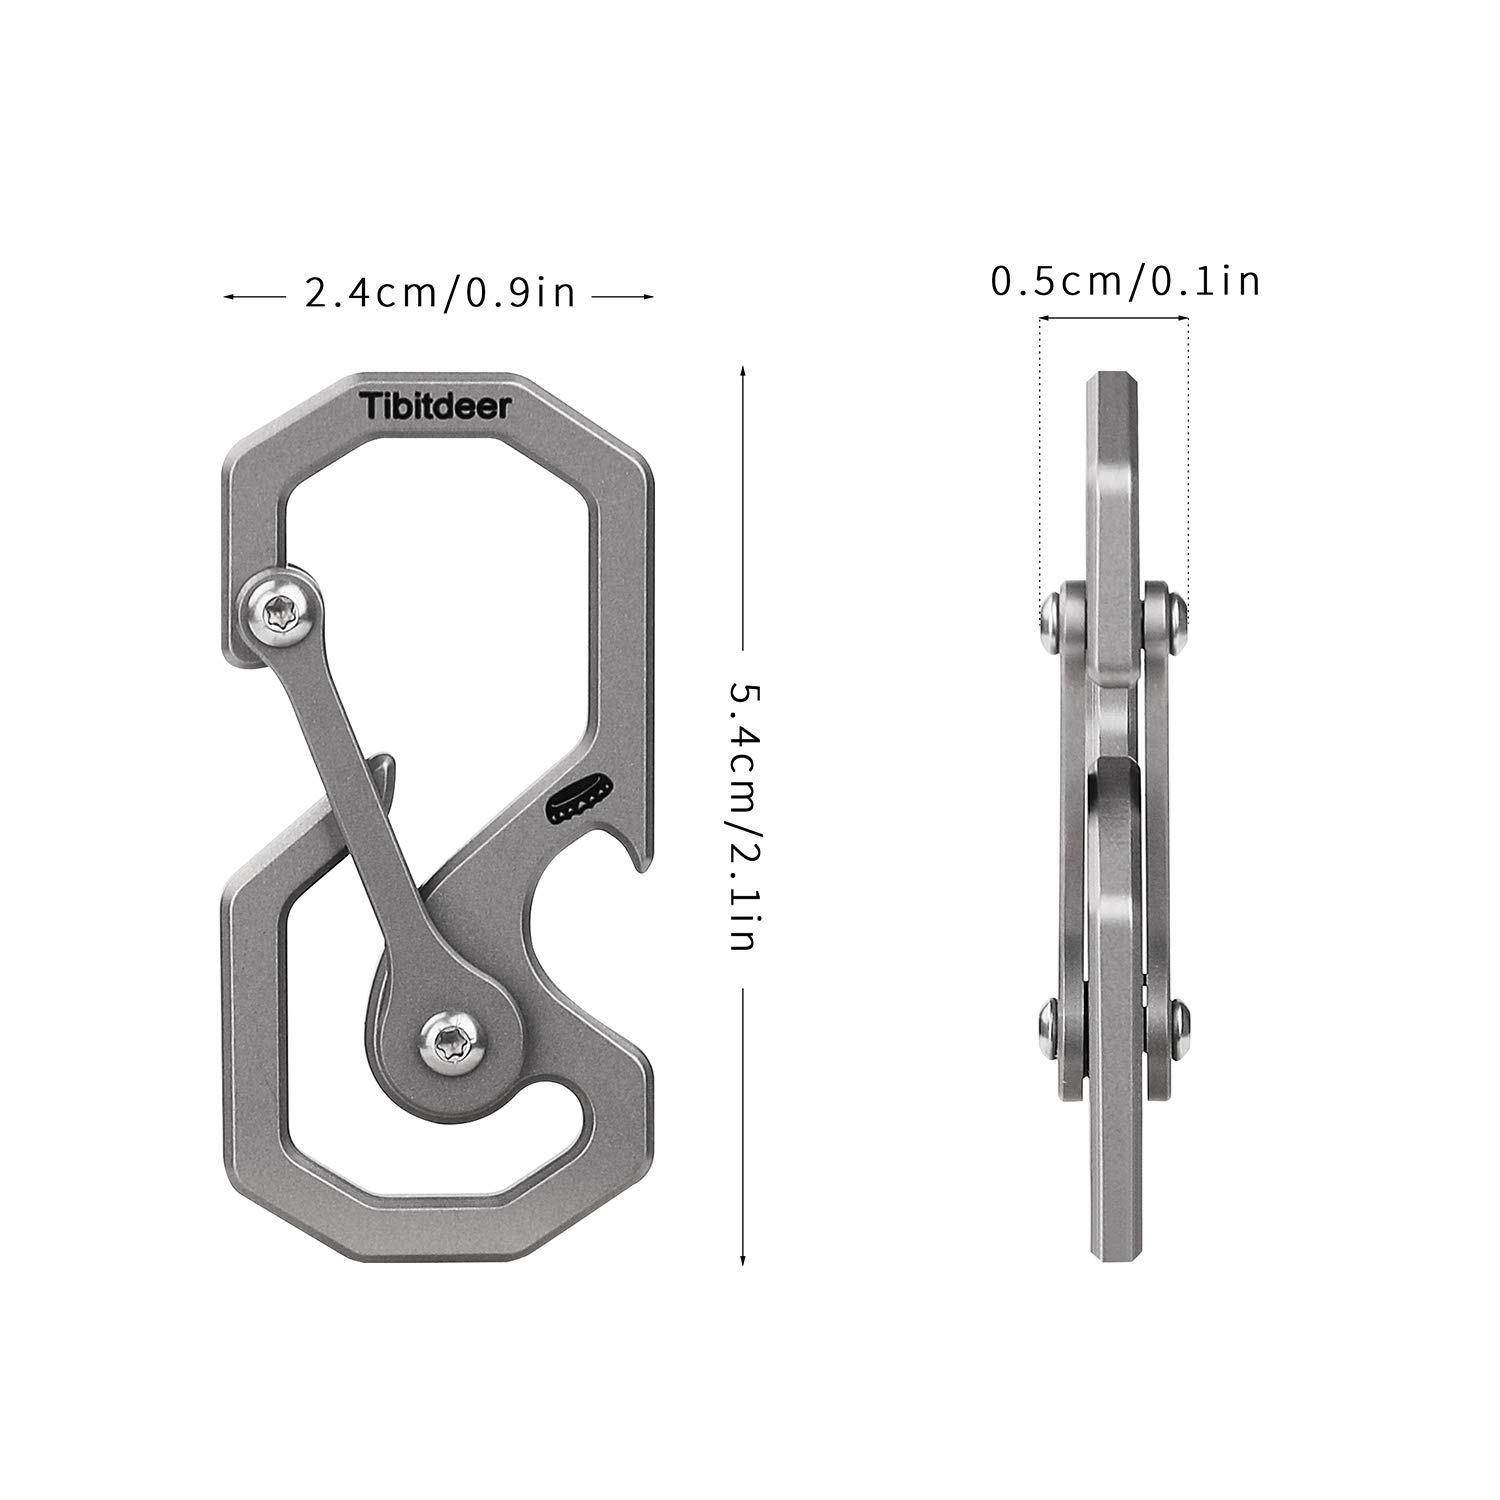 Tibitdeer Titanium Key chain, Multifunctional carabiner Keychain Heavy Duty car Key chains Organizer for Men and Women